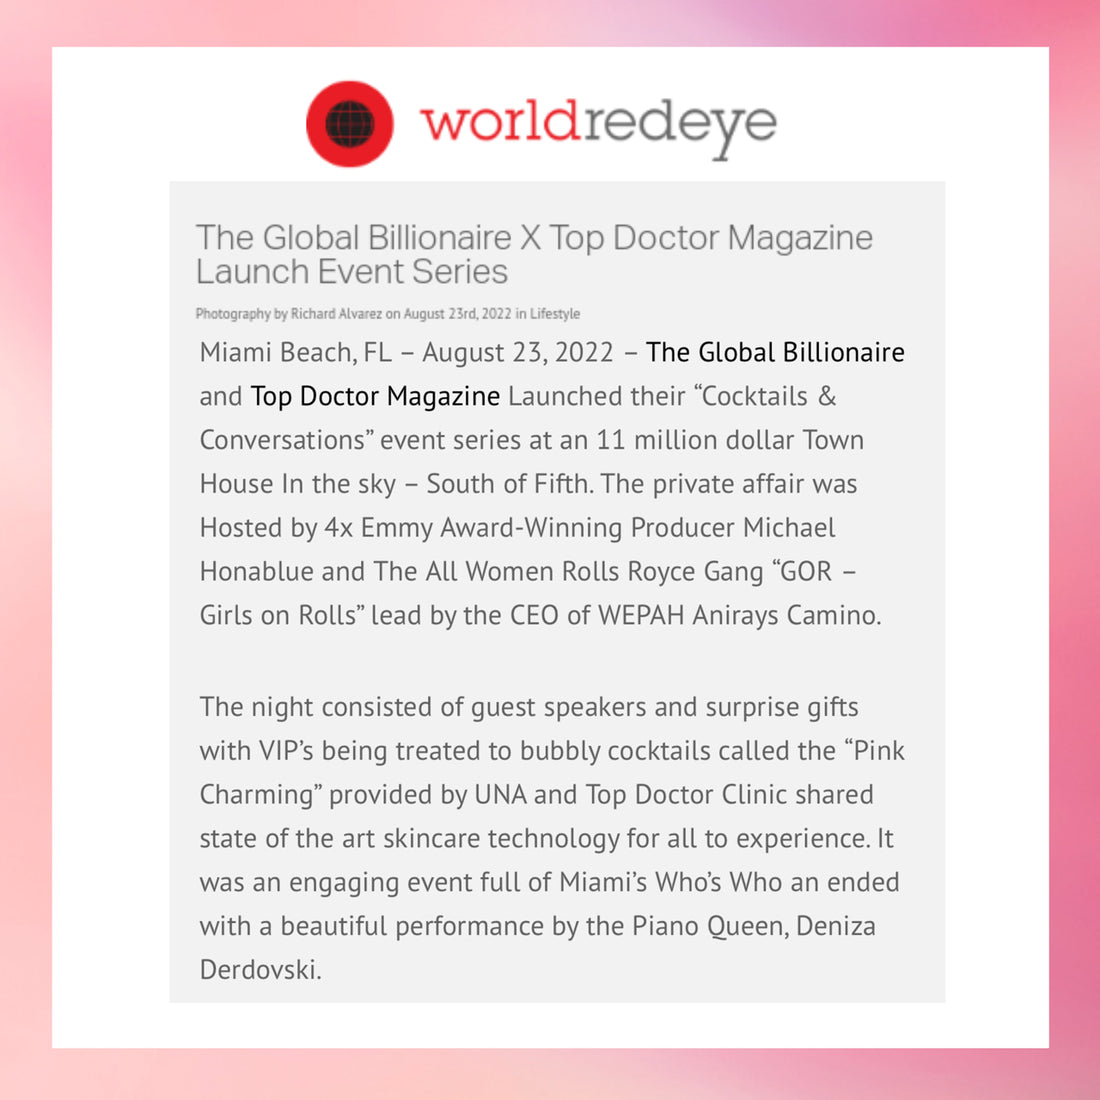 The Global Billionaire X Top Doctor Magazine